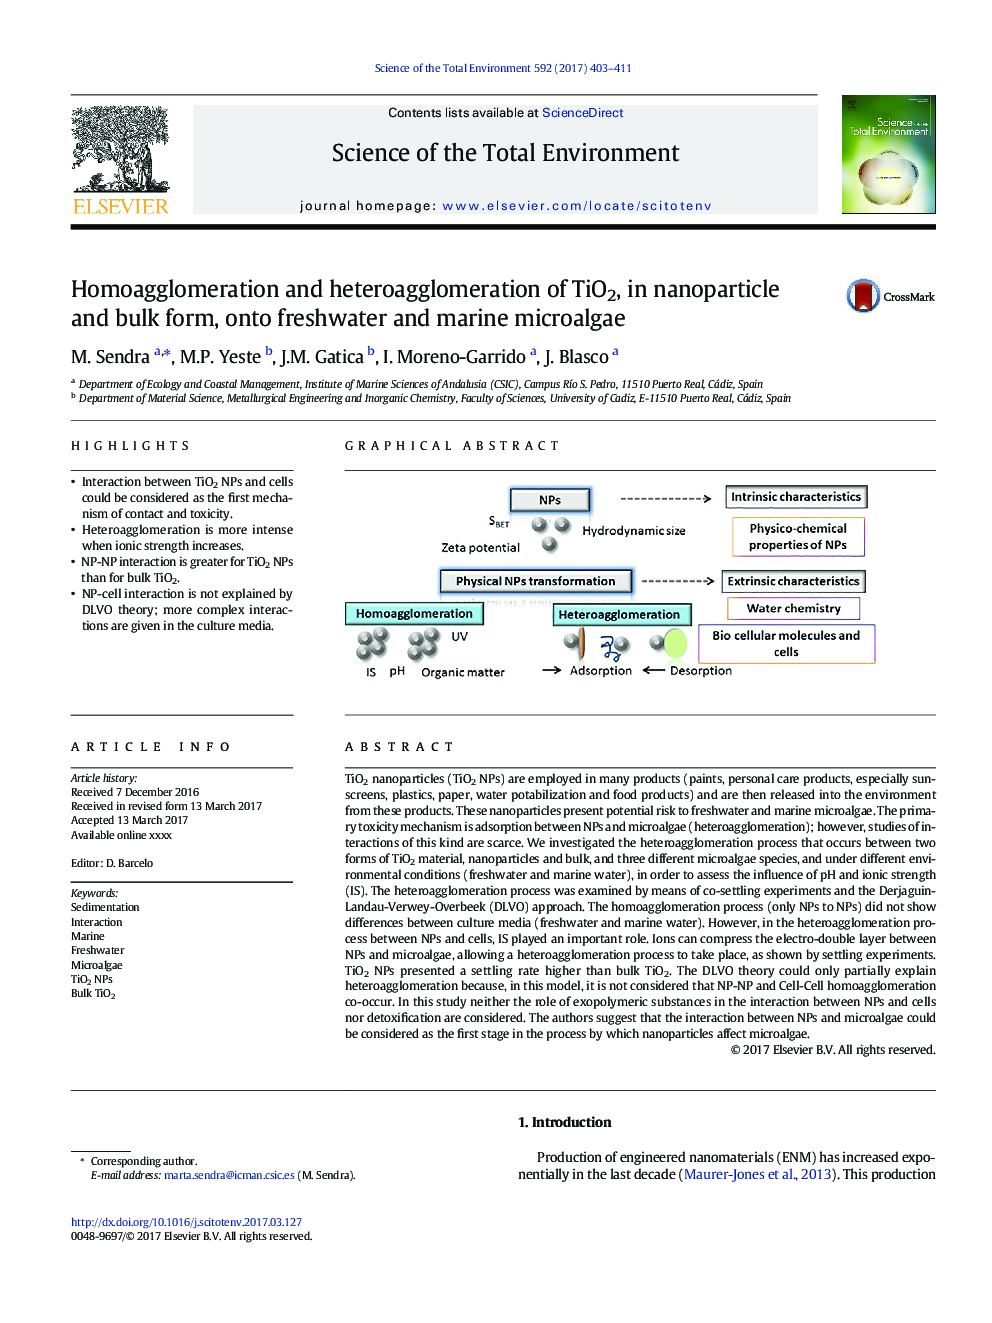 Homoagglomeration and heteroagglomeration of TiO2, in nanoparticle and bulk form, onto freshwater and marine microalgae